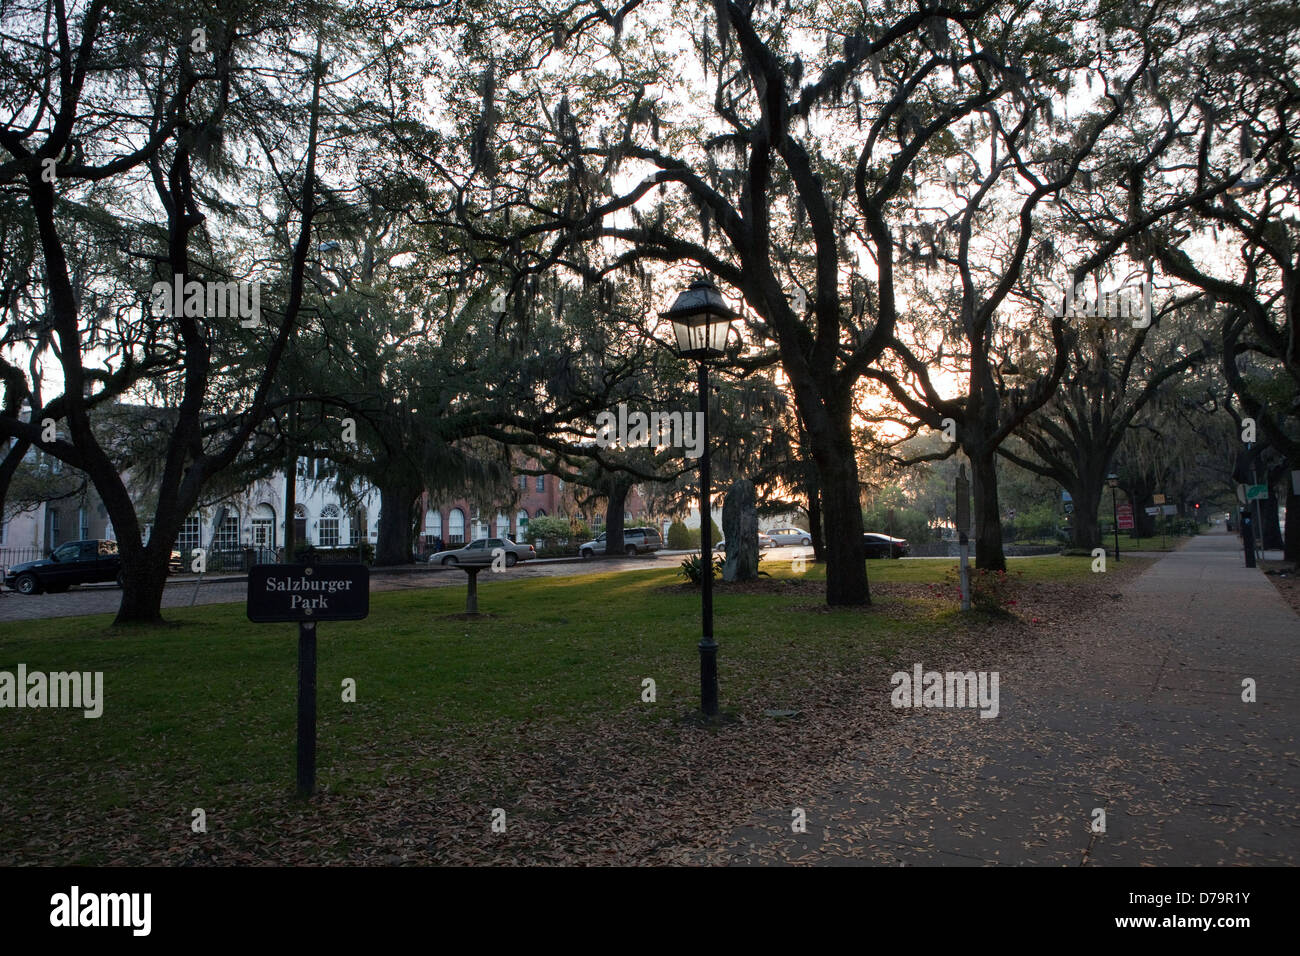 A view of Salzburger Park in Savannah, Georgia Stock Photo